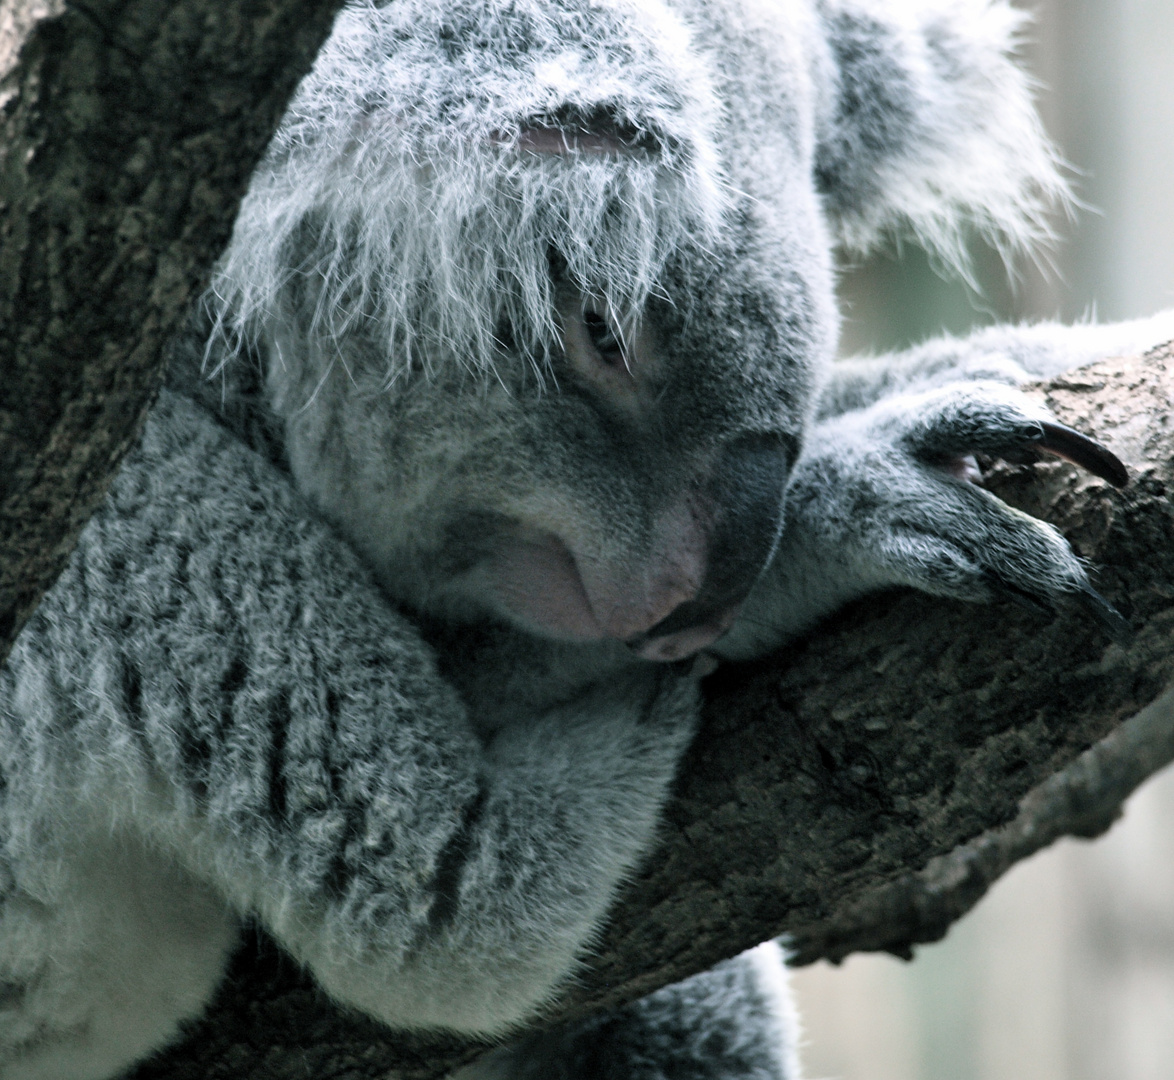 Koala-Porträt